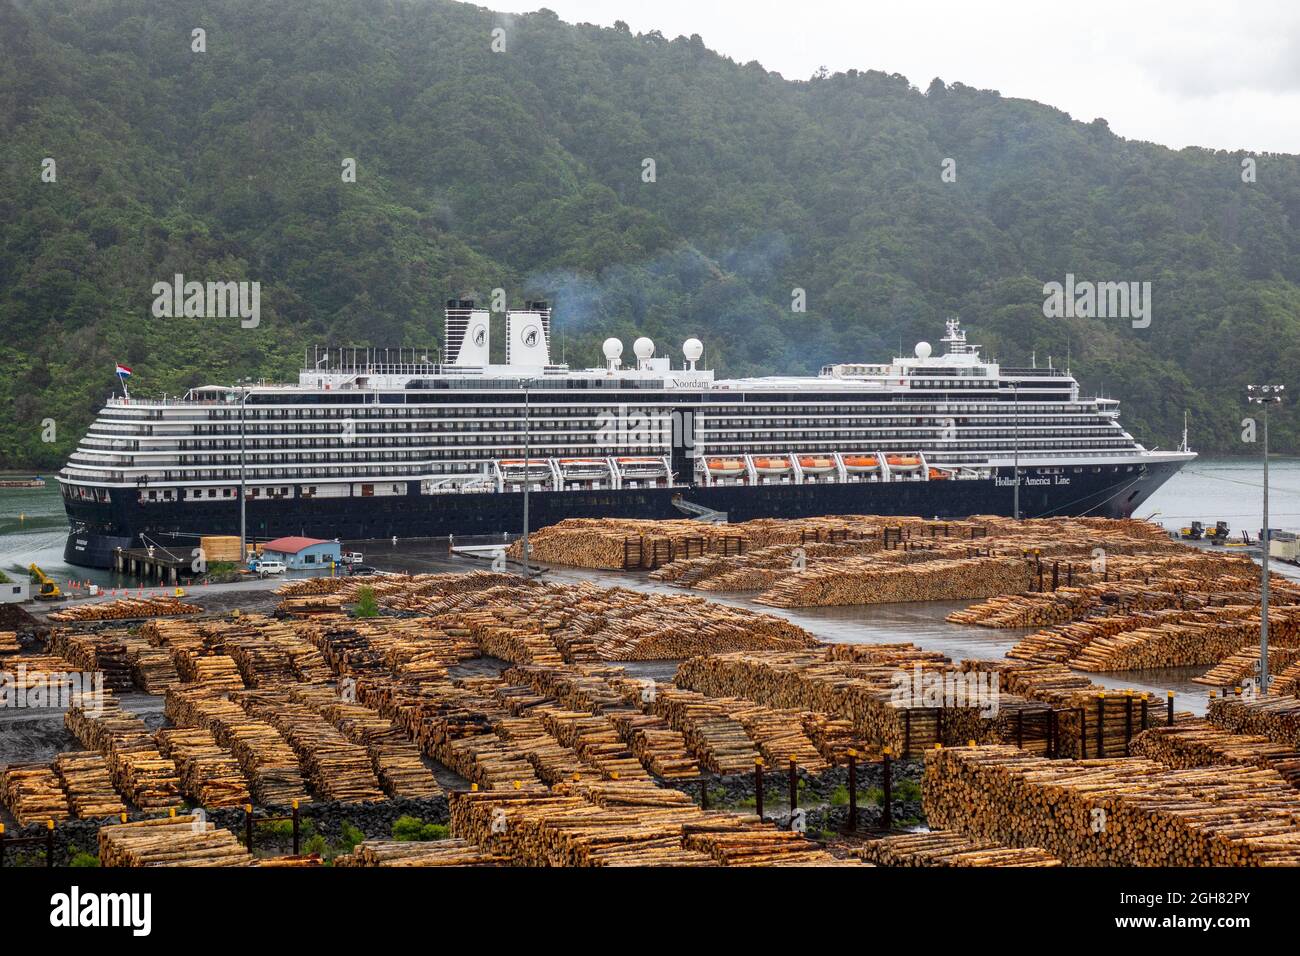 Holland America MS Noordam im Hafen von Marlborough Picton Neuseeland Export Tree Logs Holzholz am Kai Stockfoto